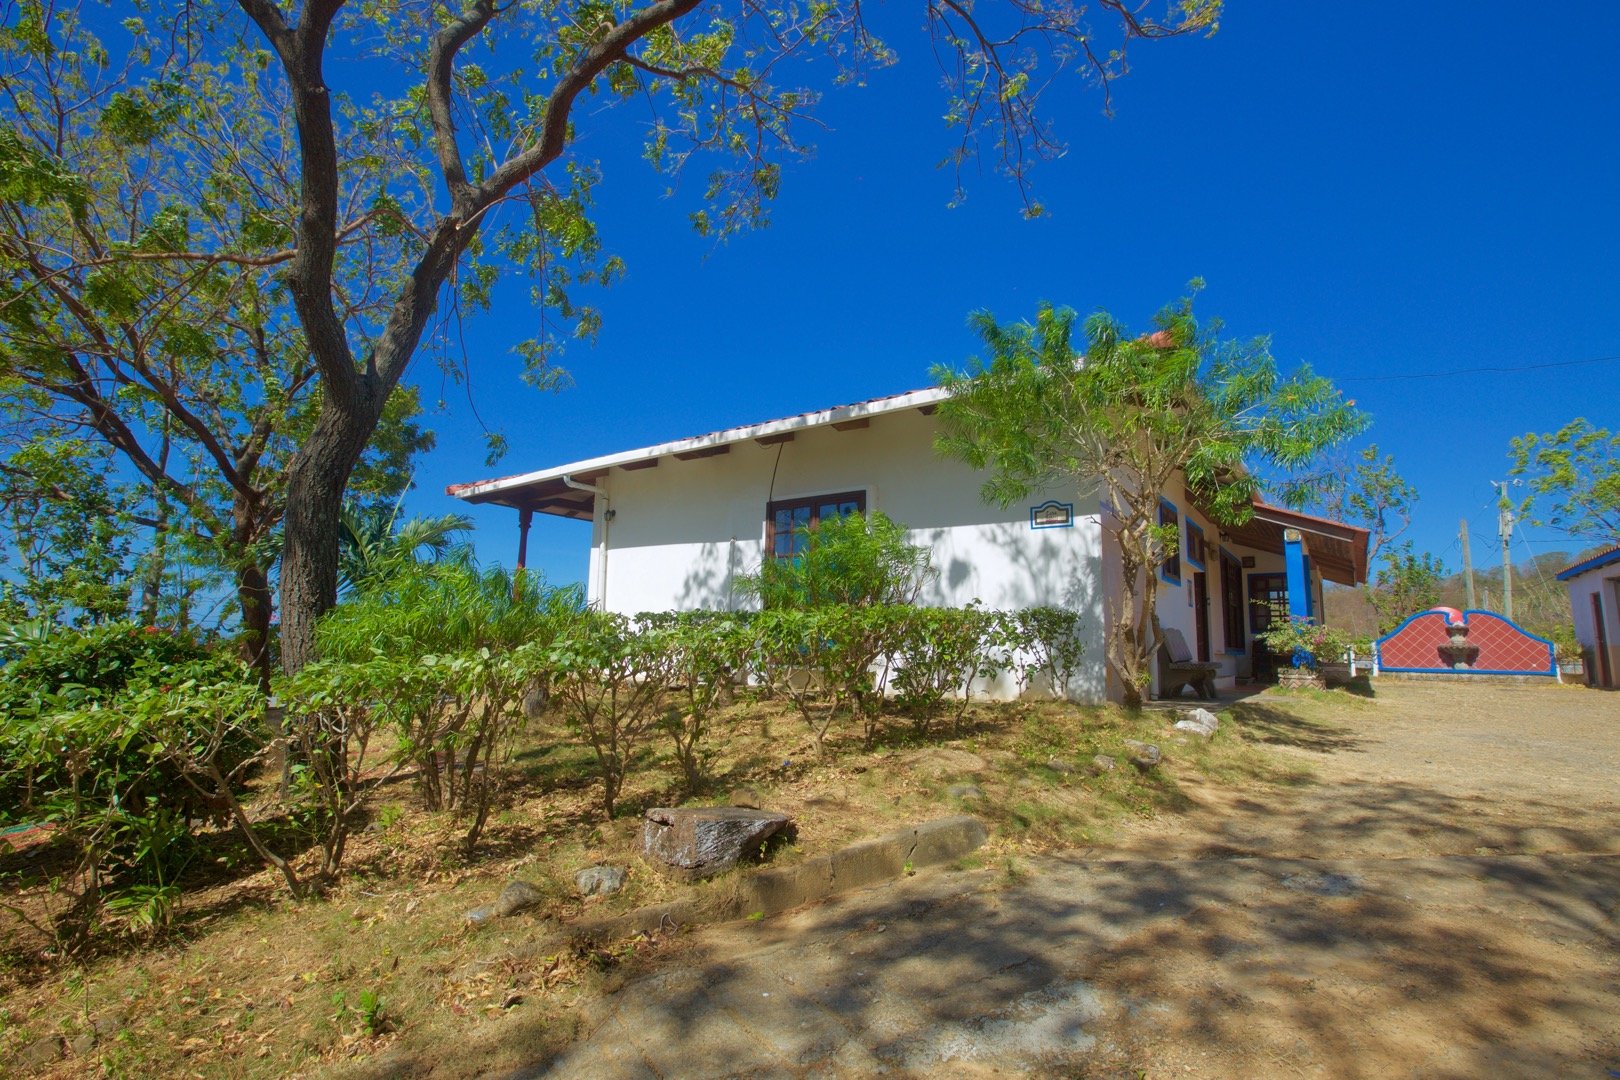 Playa Coco San Juan Del Sur Home on Two Acres For Sale 2.jpeg